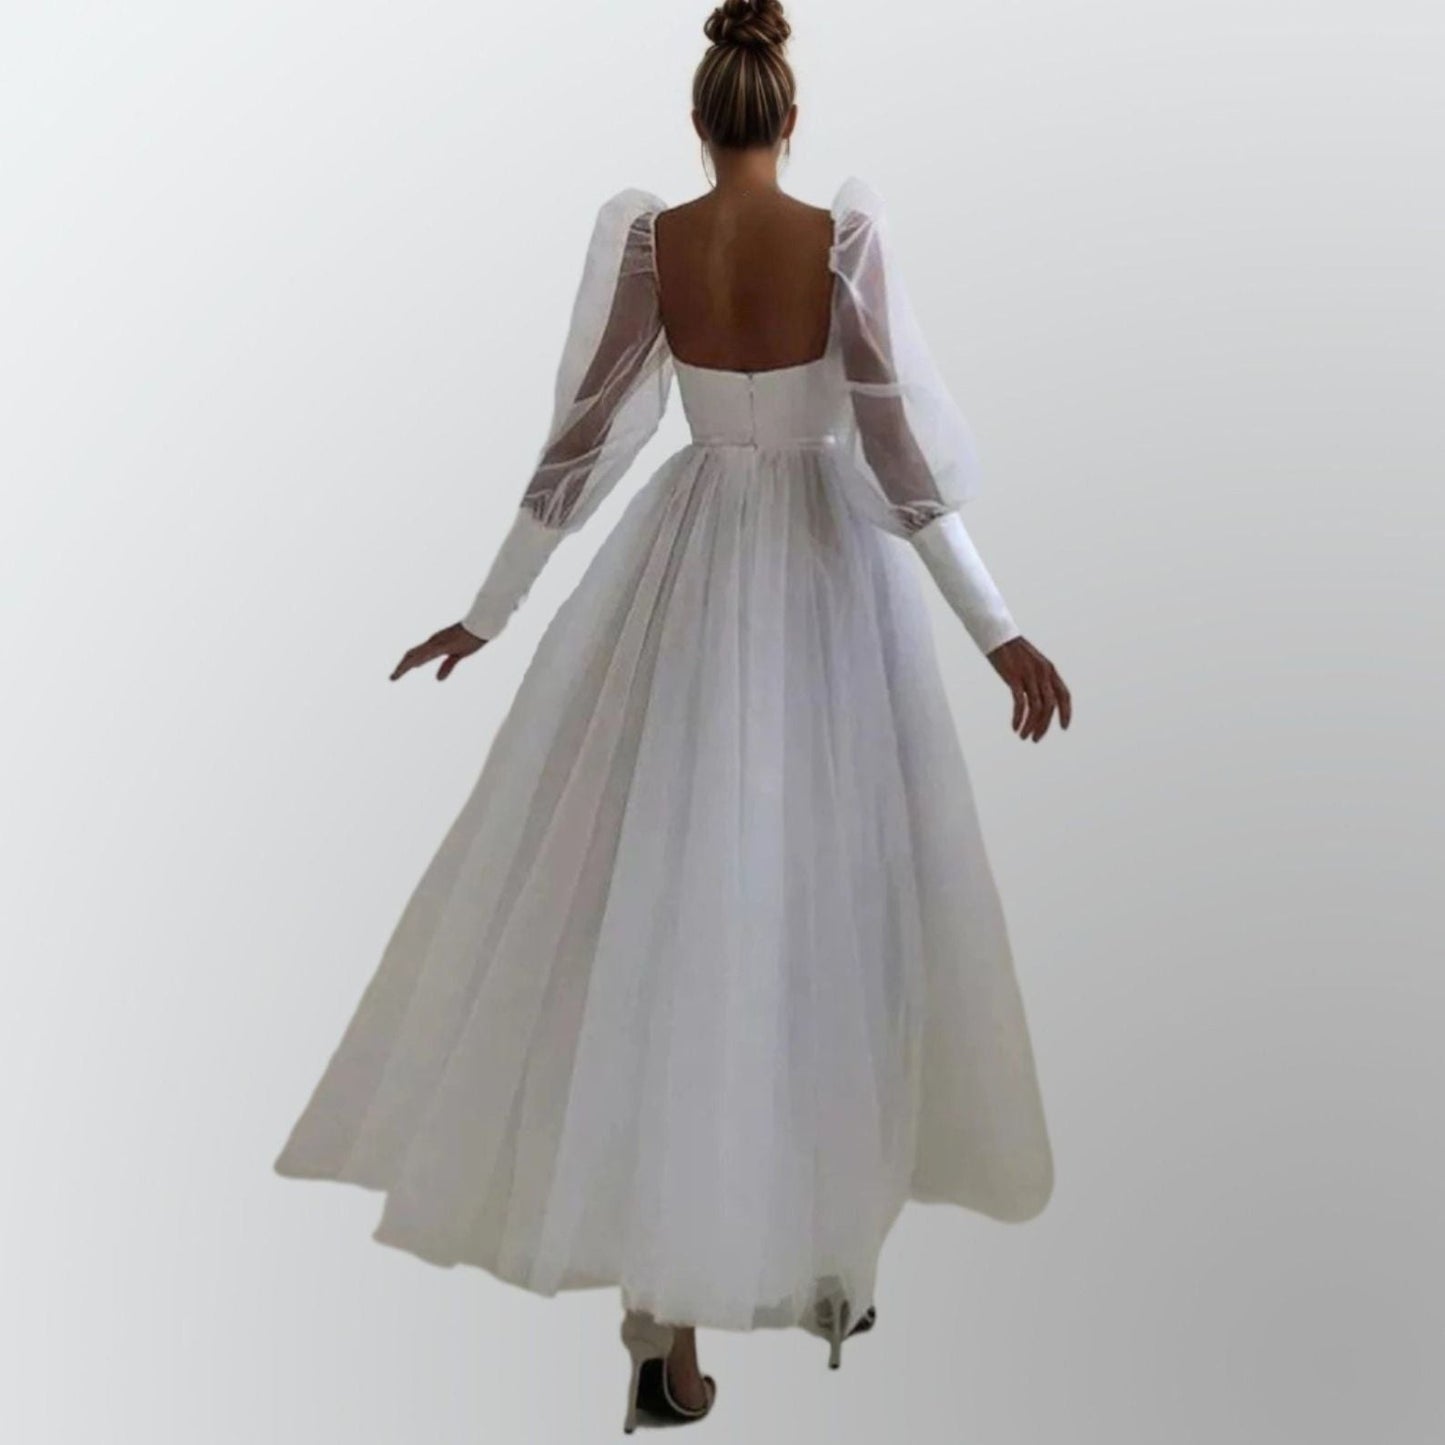 FAITH Formal Couture Dress